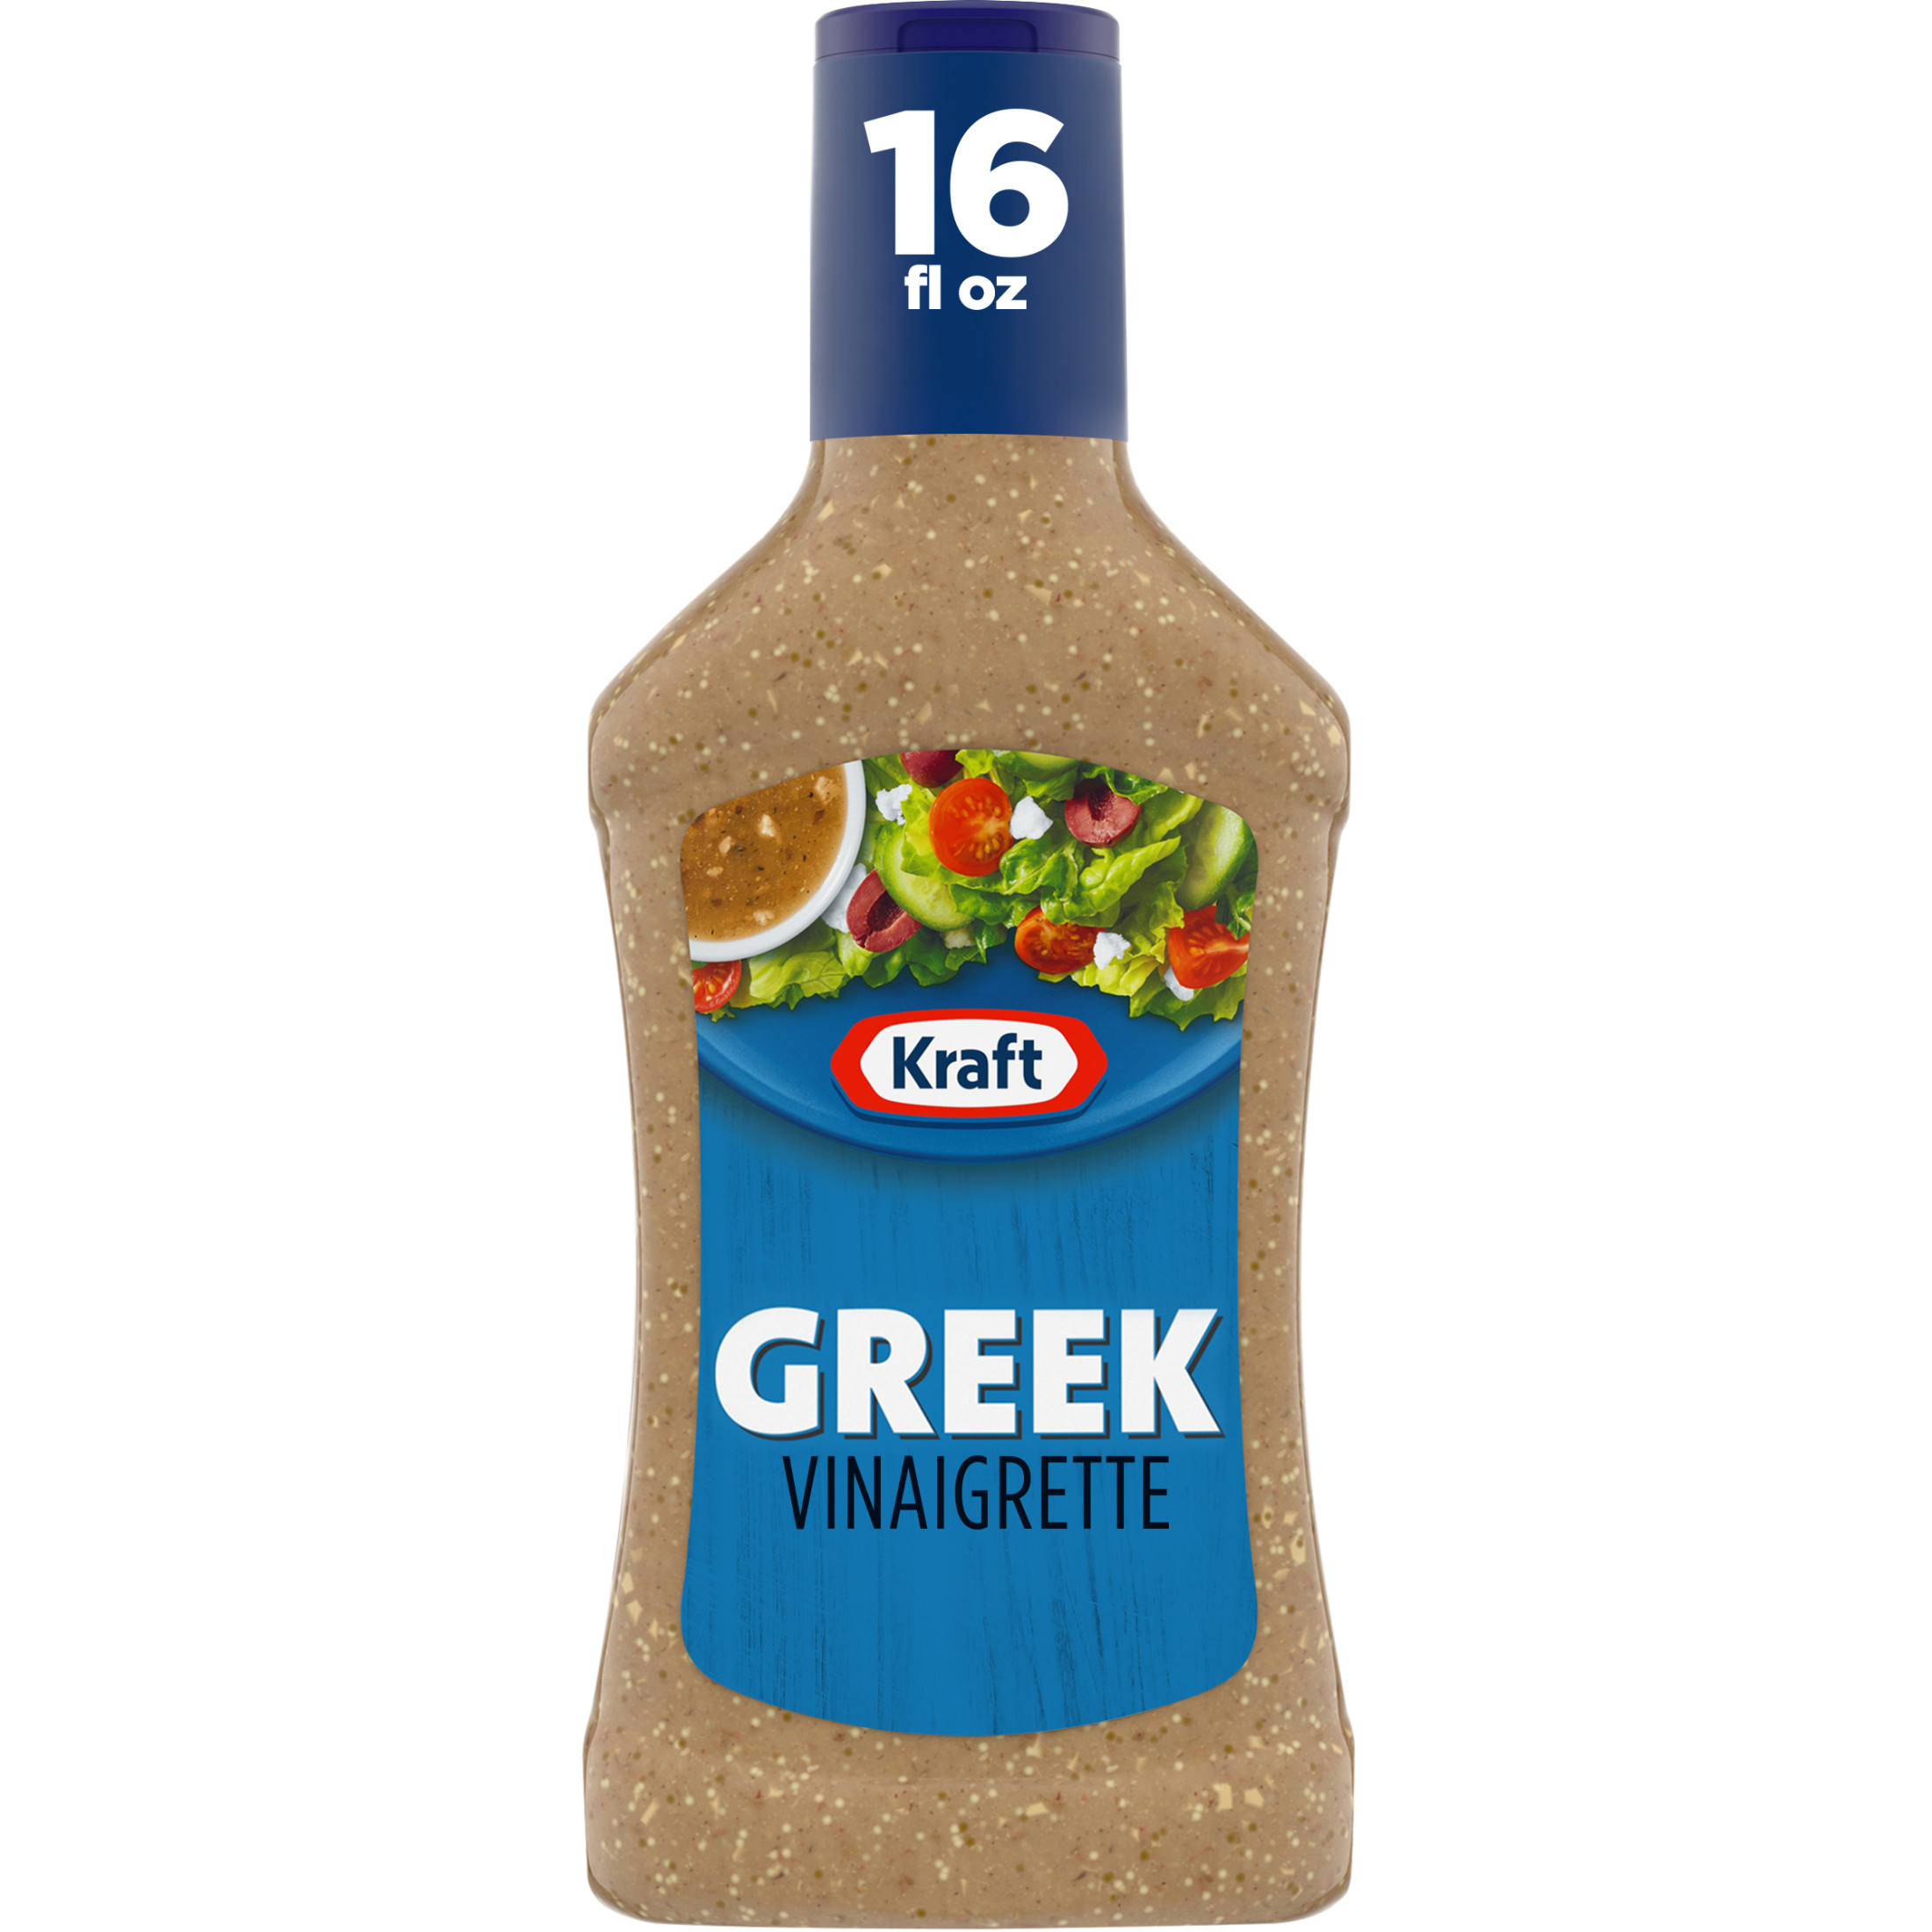 Kraft Greek Vinaigrette Salad Dressing, 16 fl oz Bottle - image 1 of 6